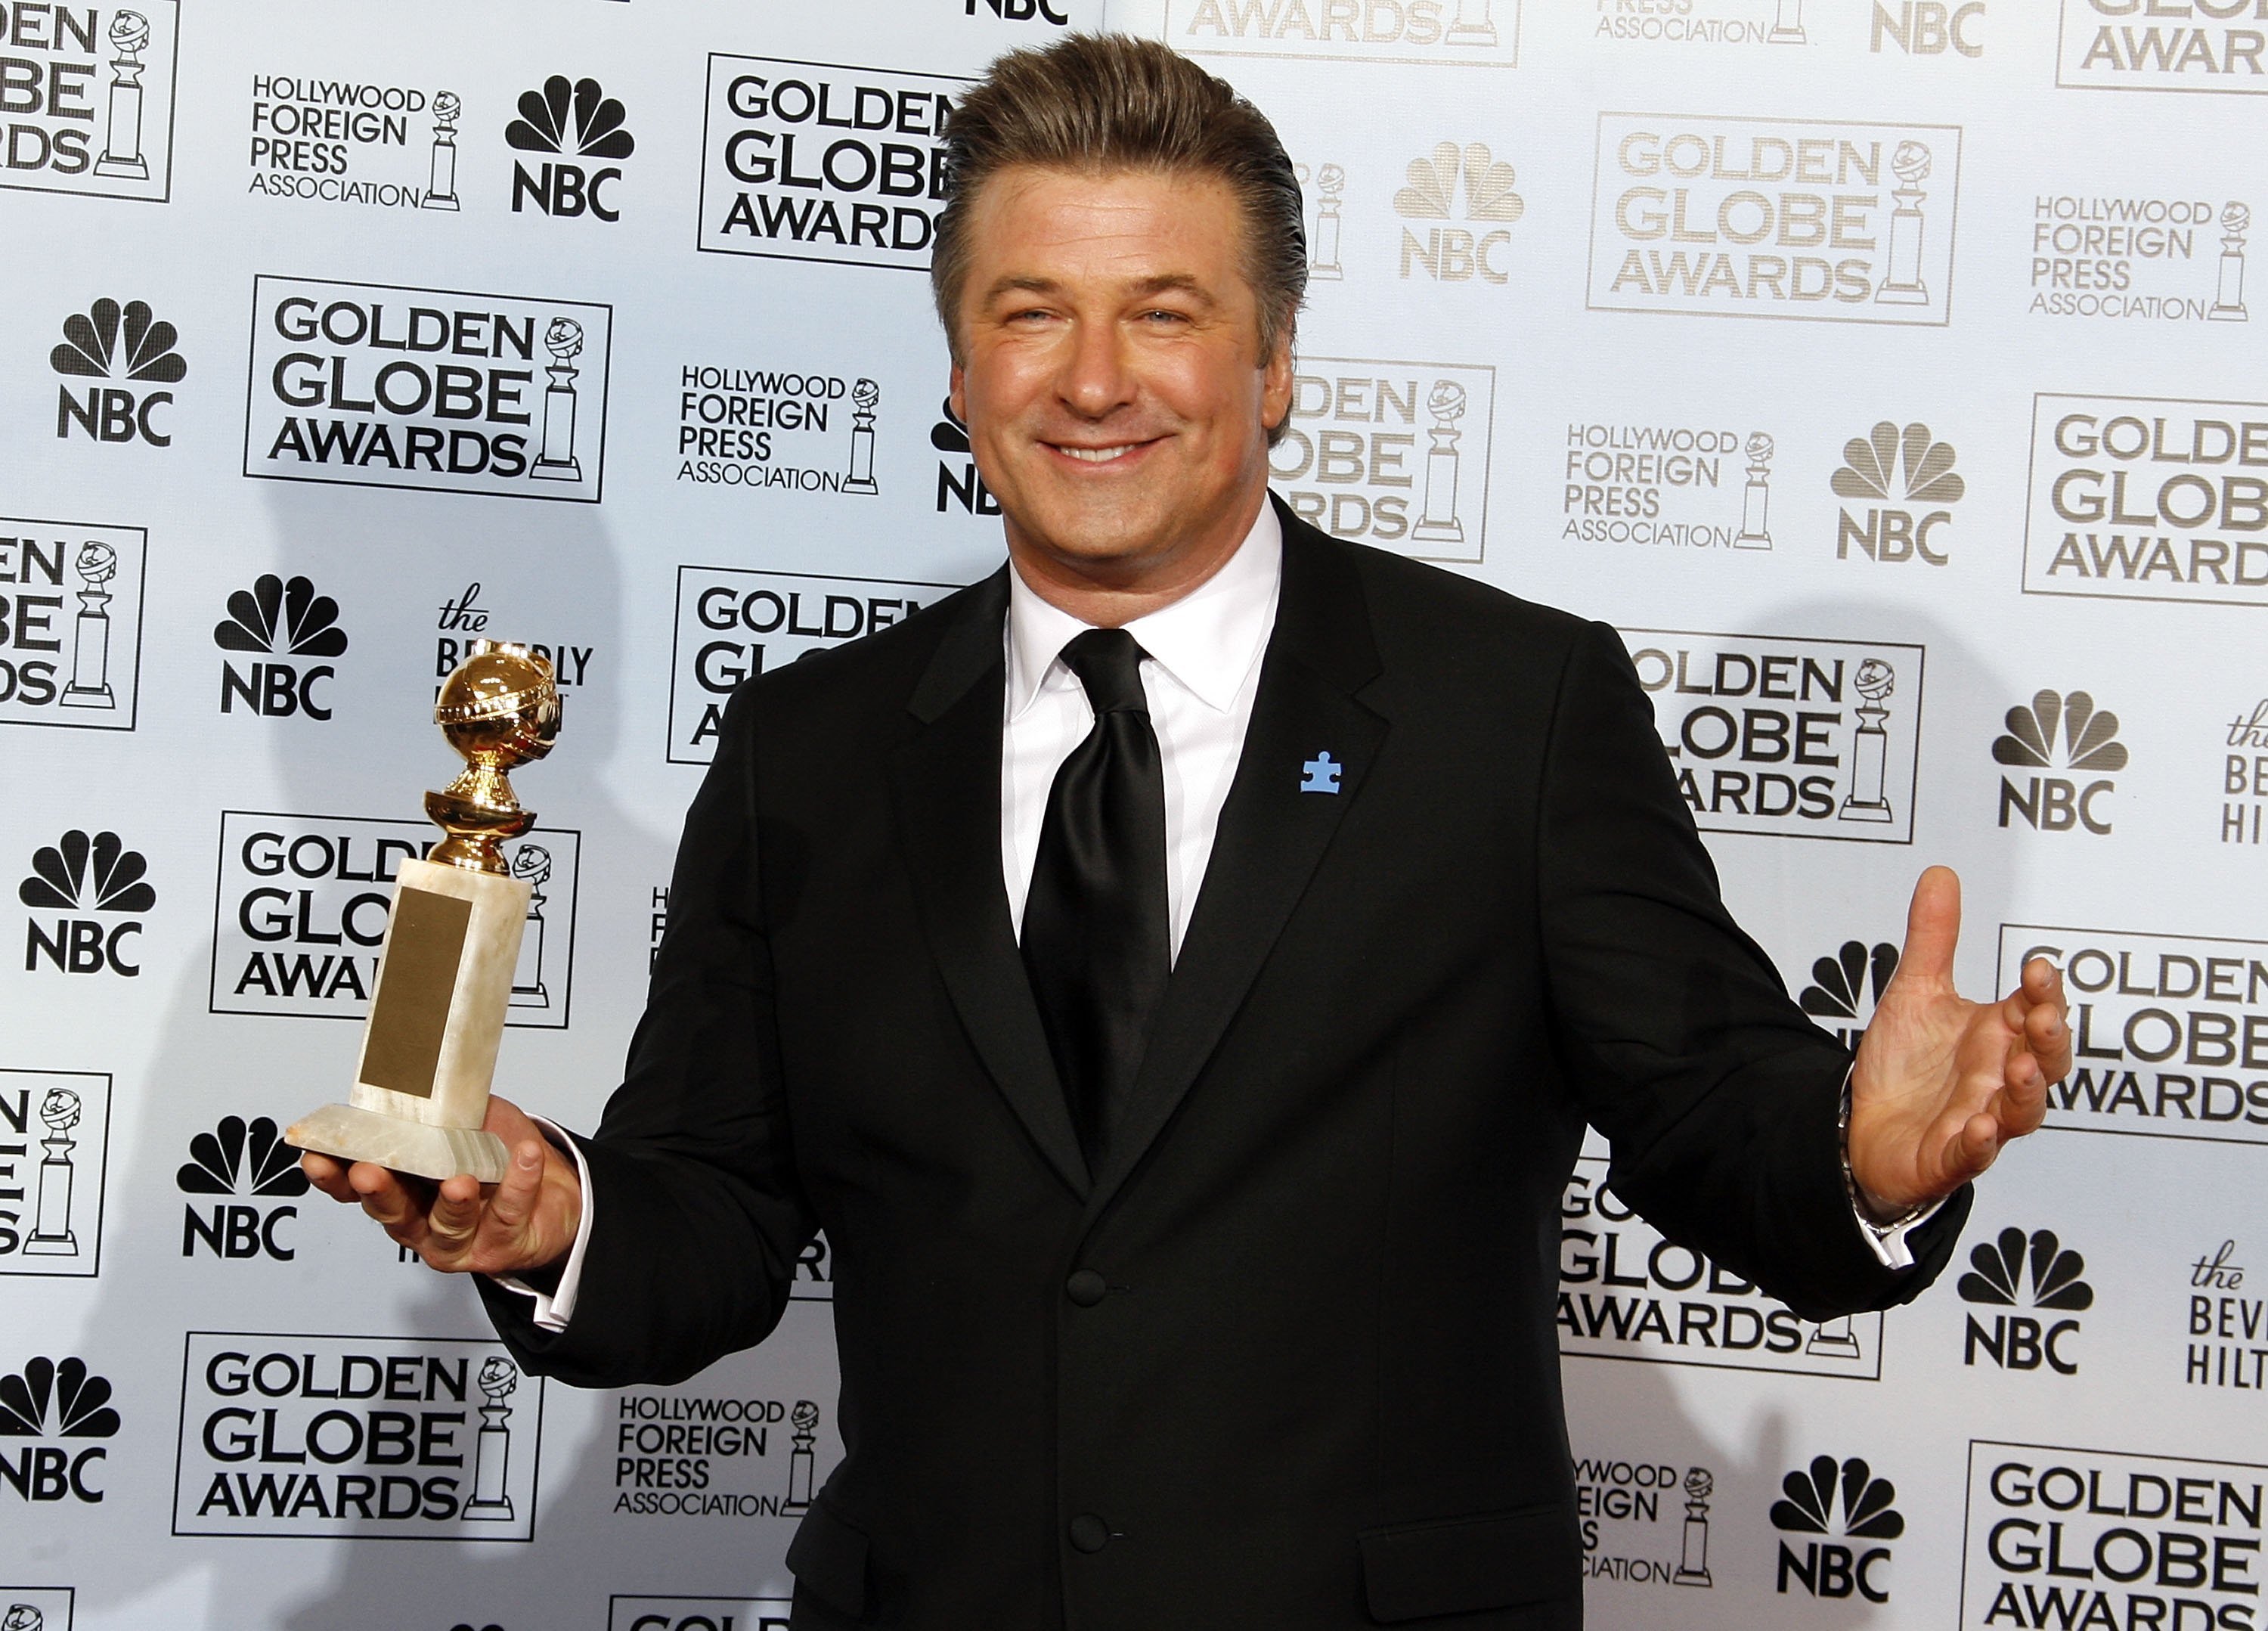 Alec Baldwin posing with his Golden Globe Award